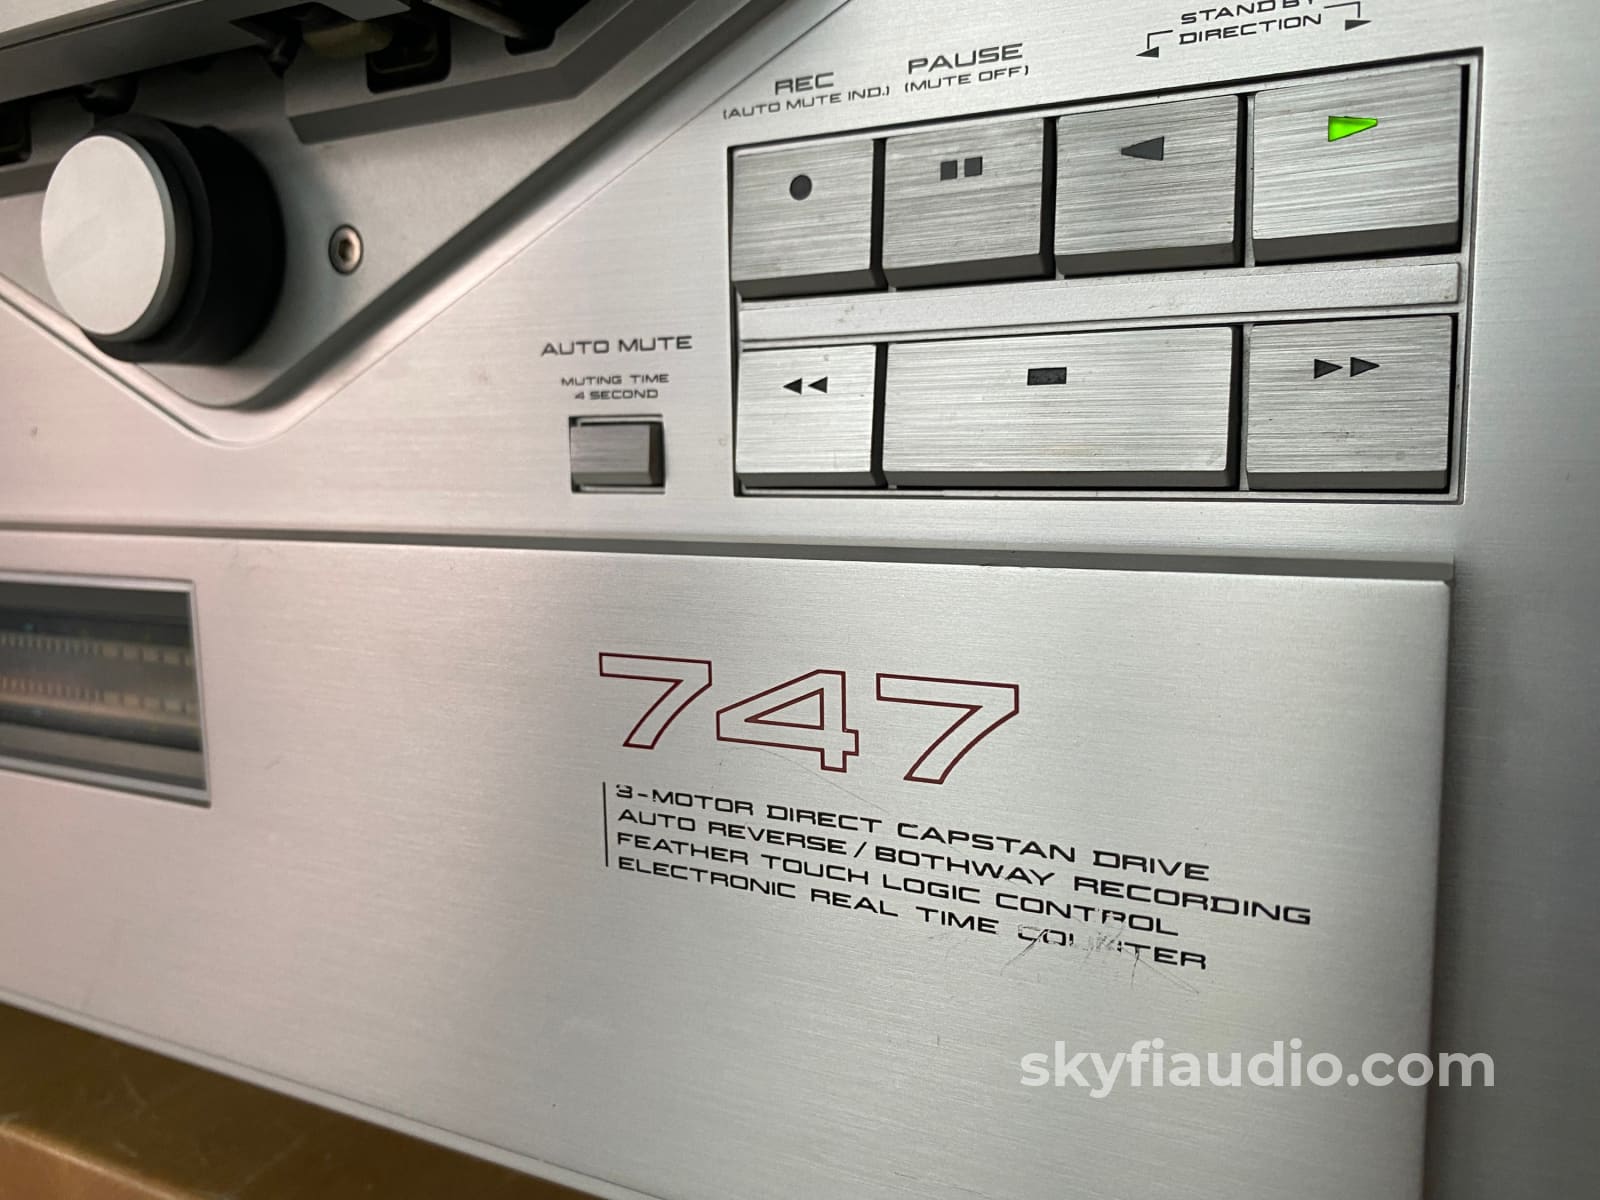 Akai Gx-747 Professional Reel To Tape Recorder - Restored Deck